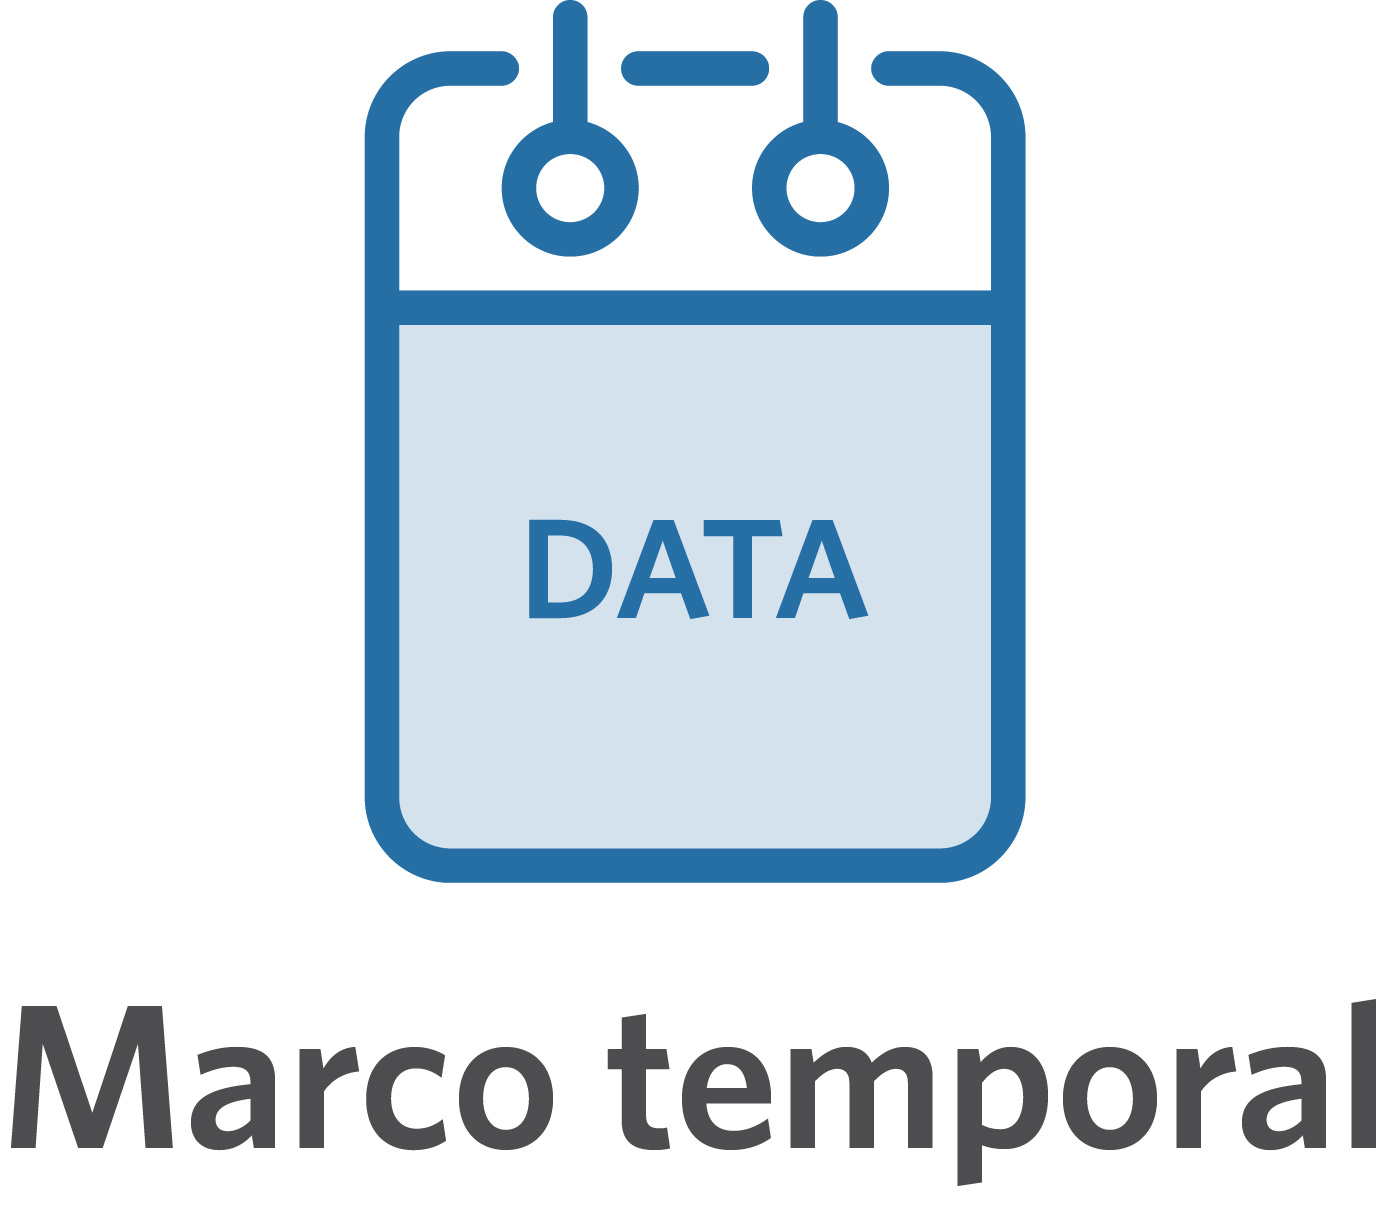 Marco temporal